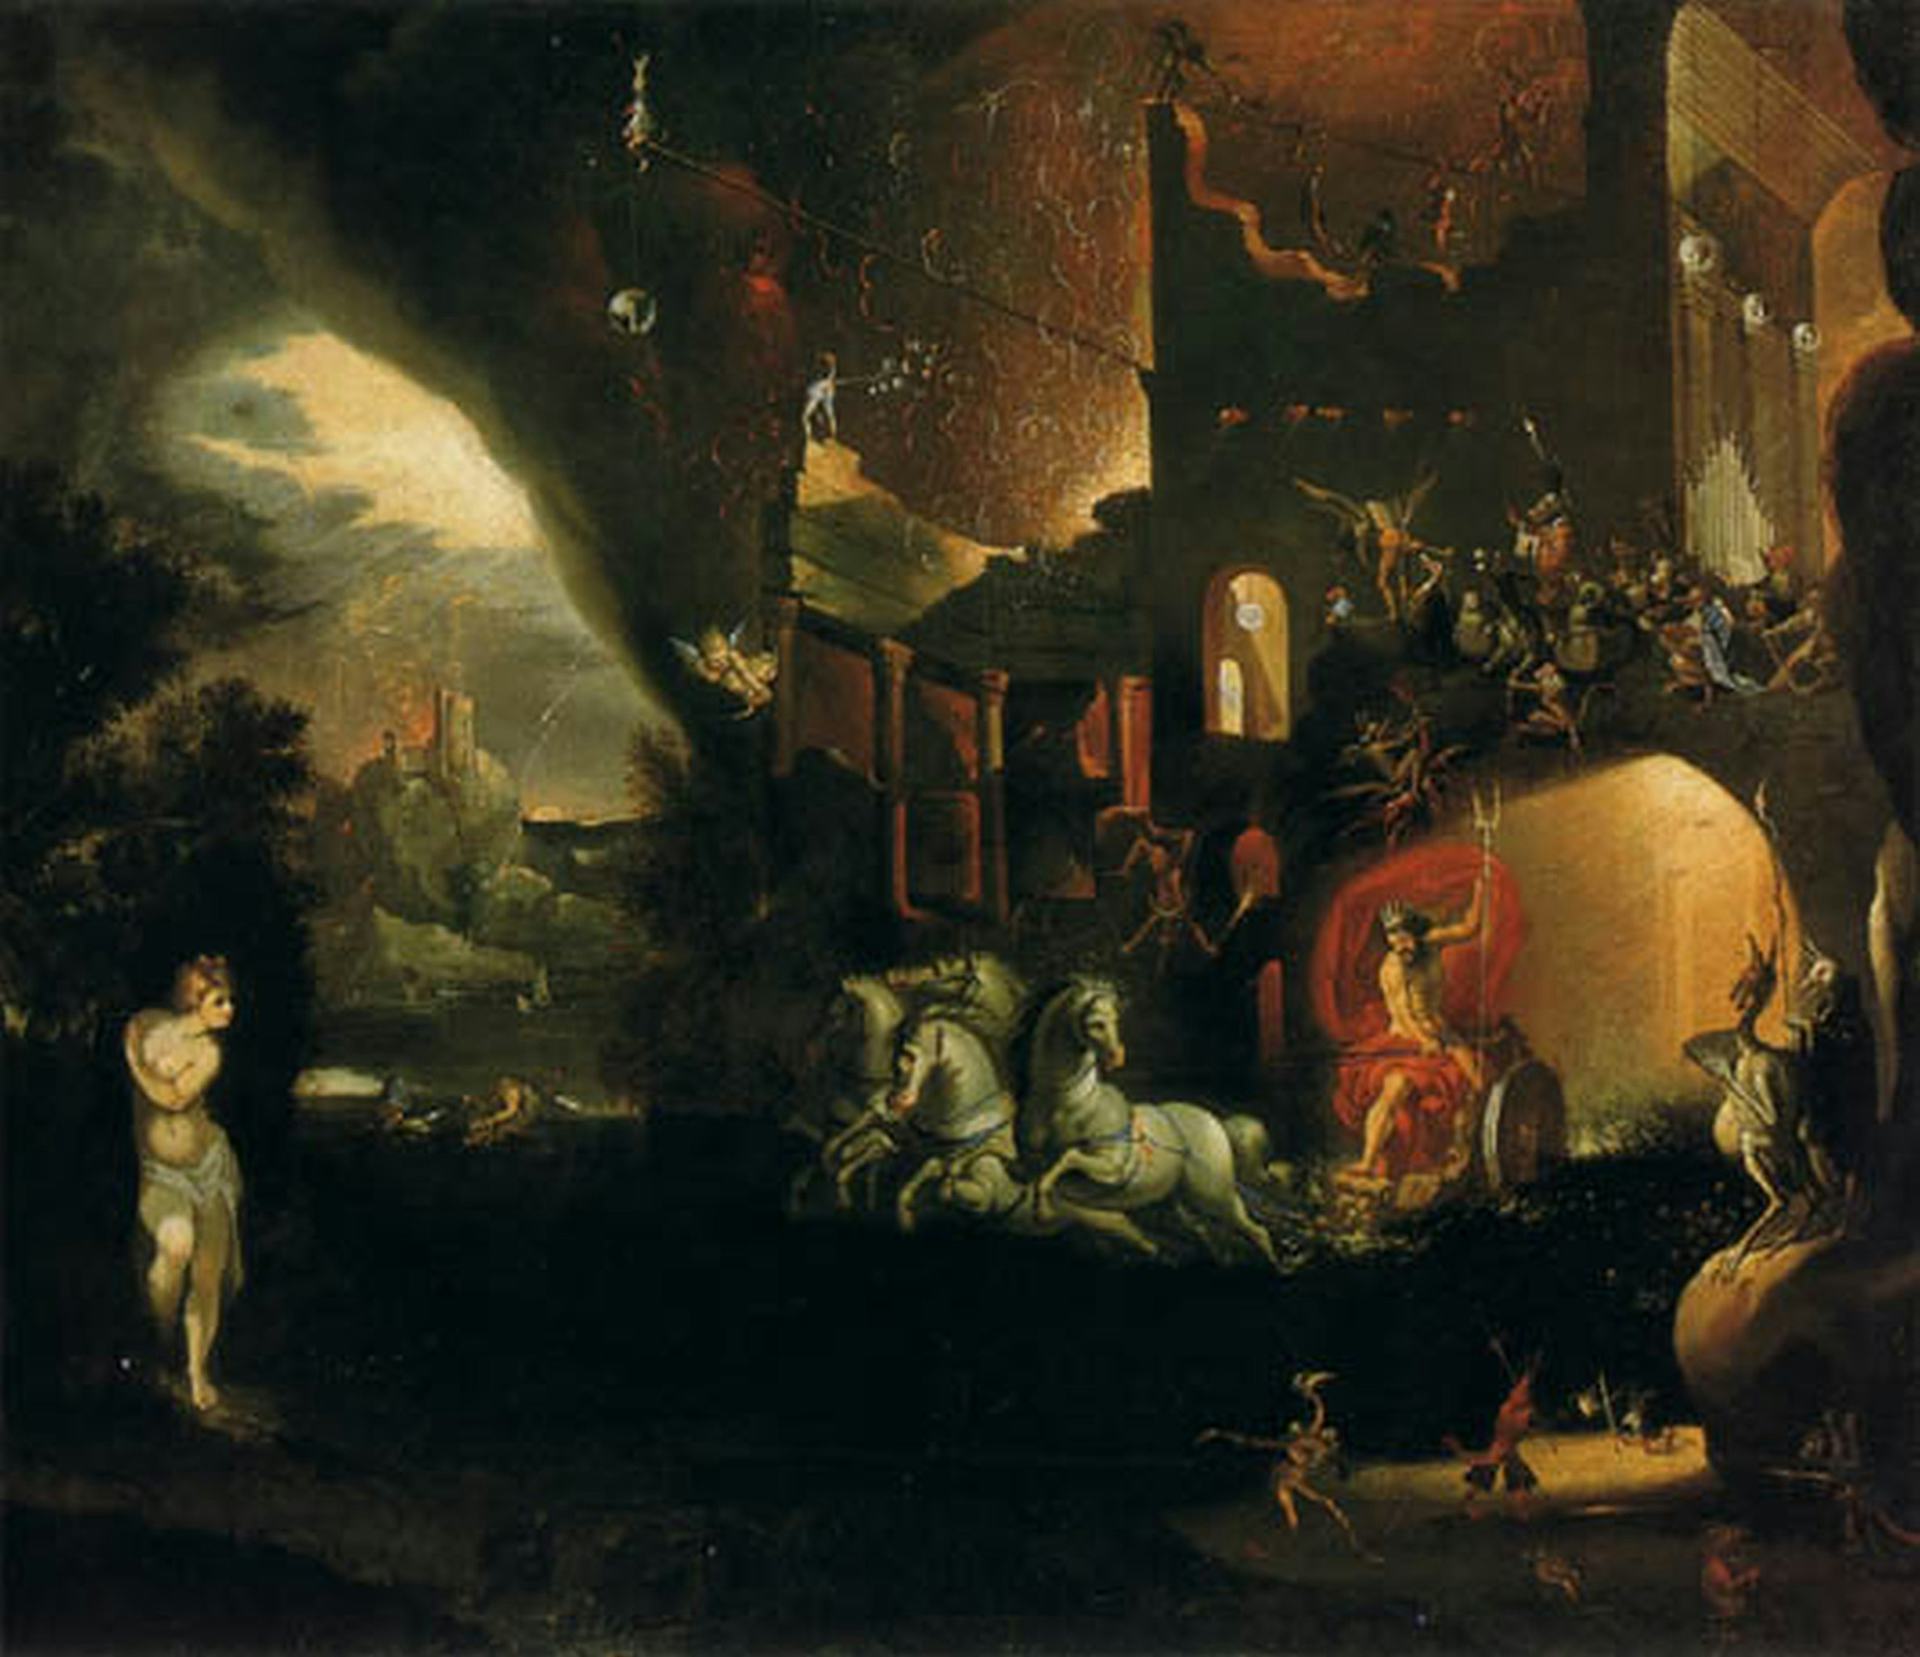 Hades' Arrival at Tartarus by Joseph Heintz II (ca. 1640)